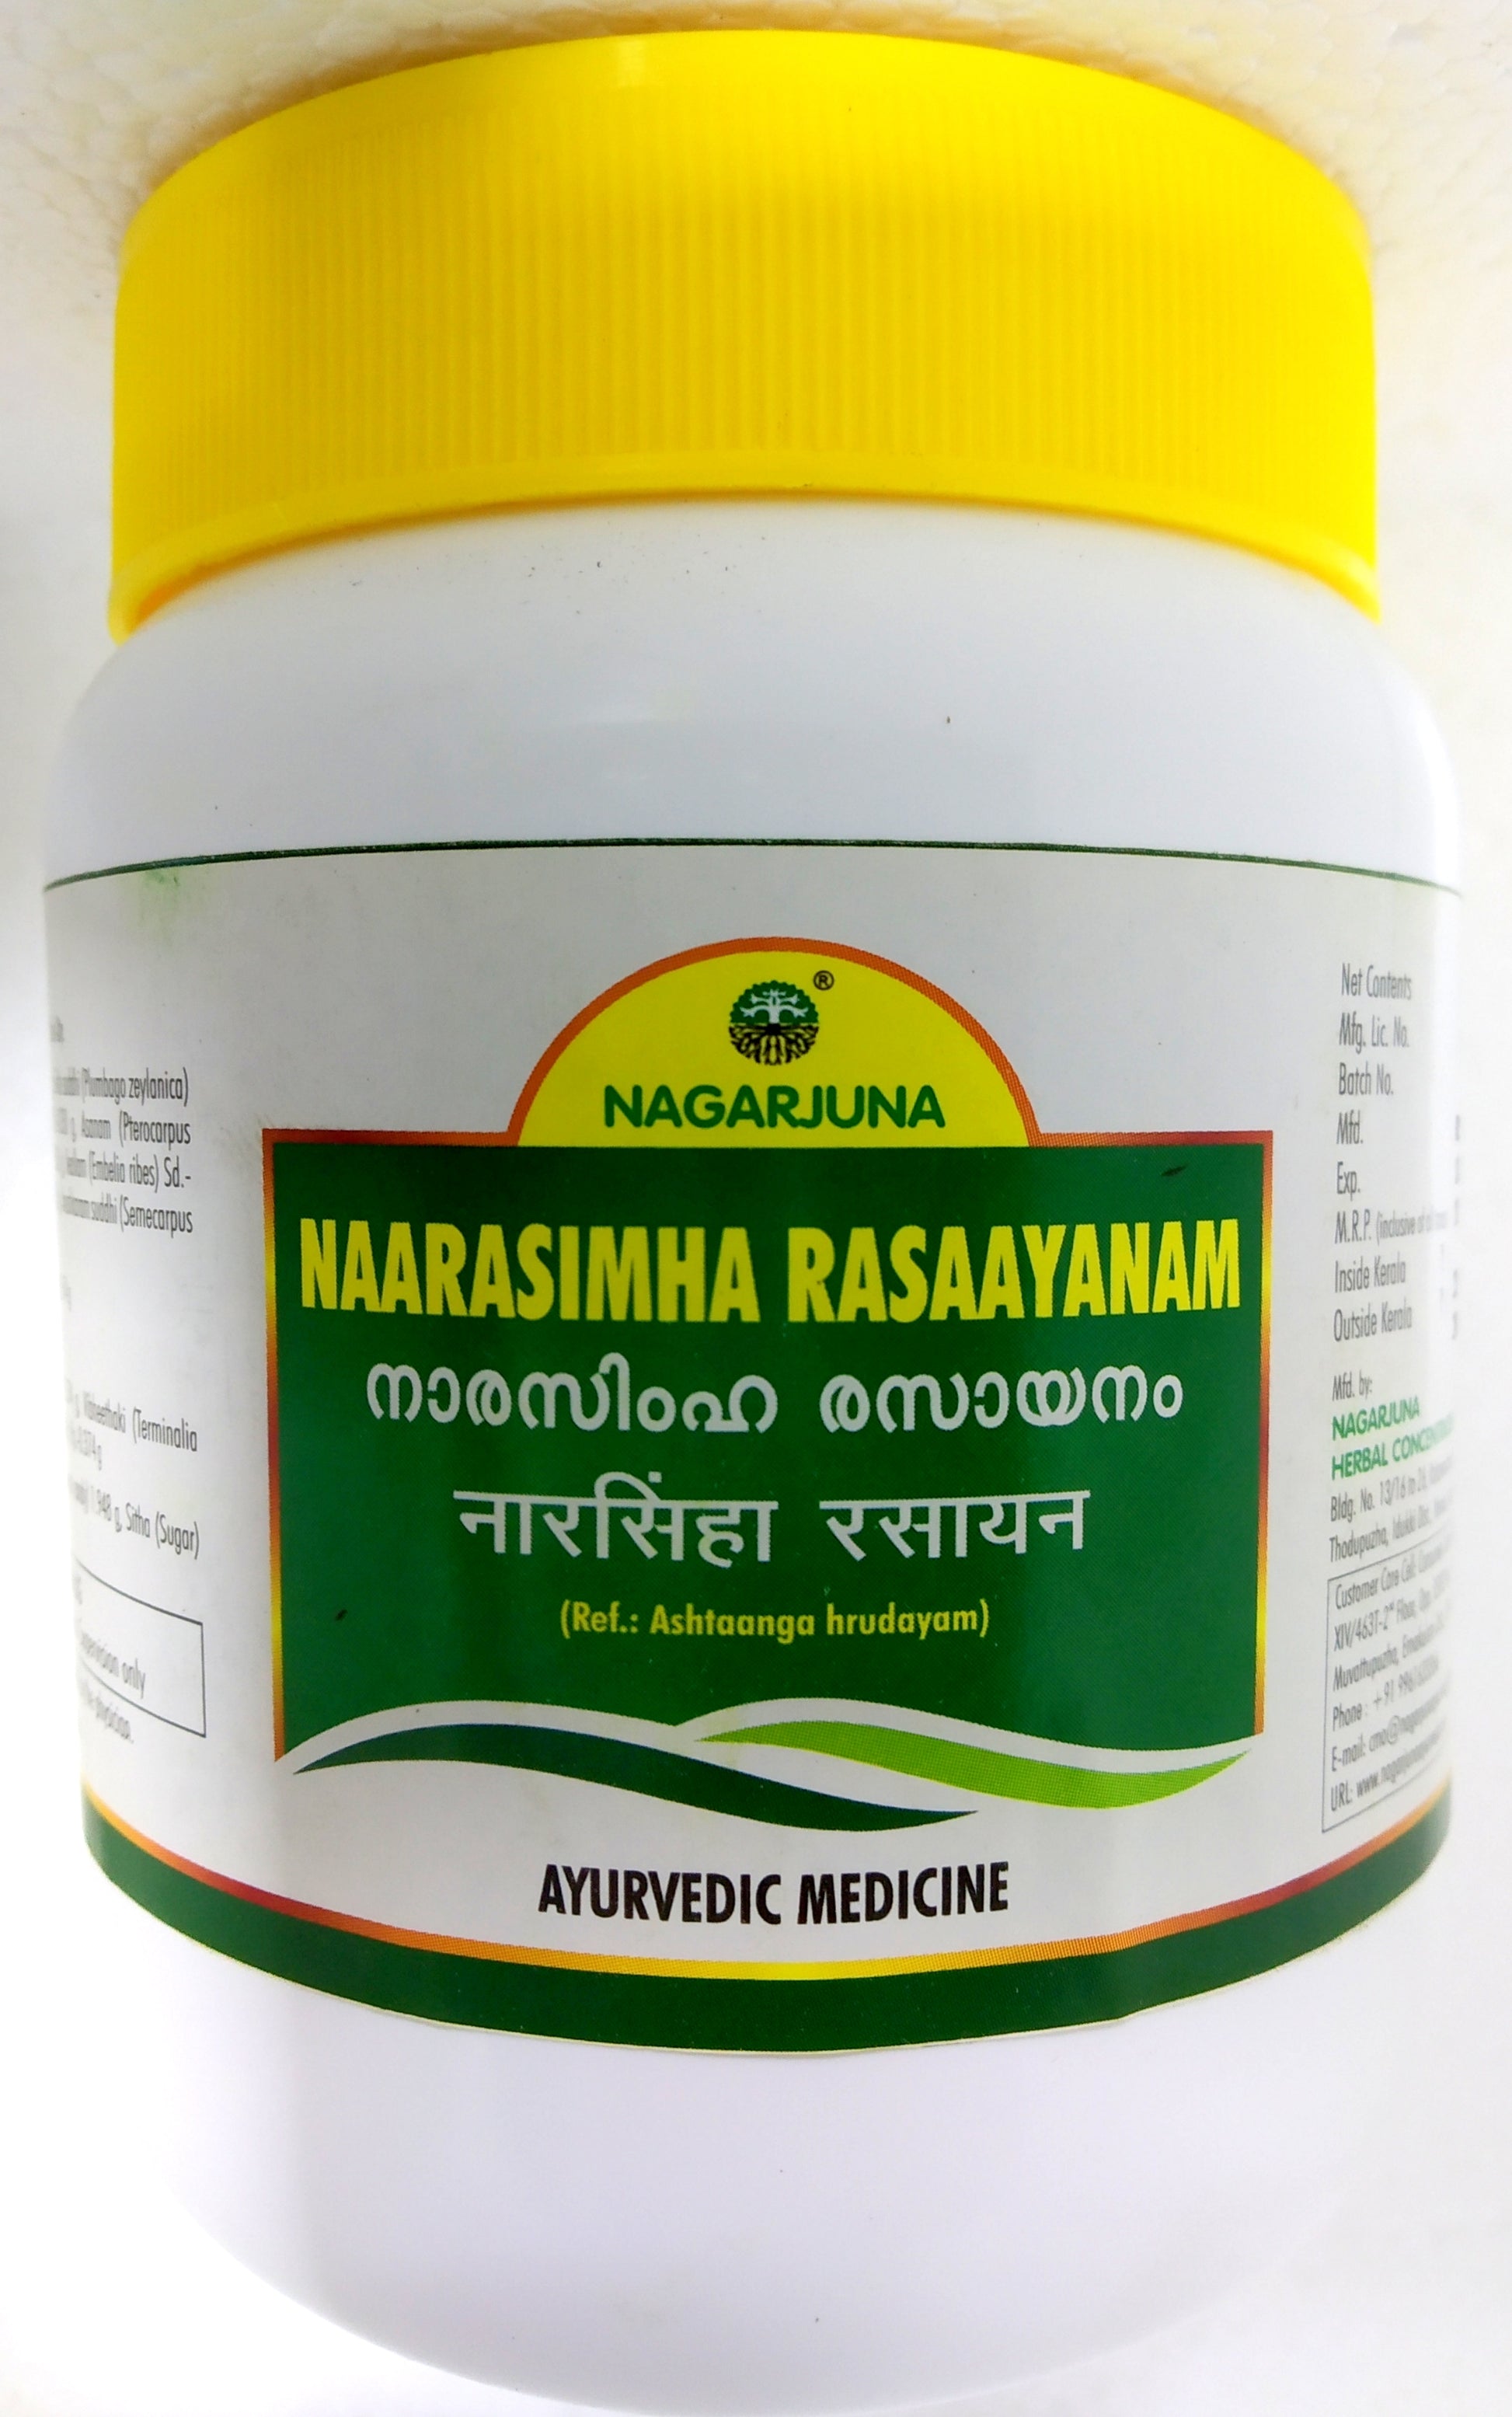 Shop Nagarjuna Narasimha Rasayanam 400g at price 280.00 from Nagarjuna Online - Ayush Care